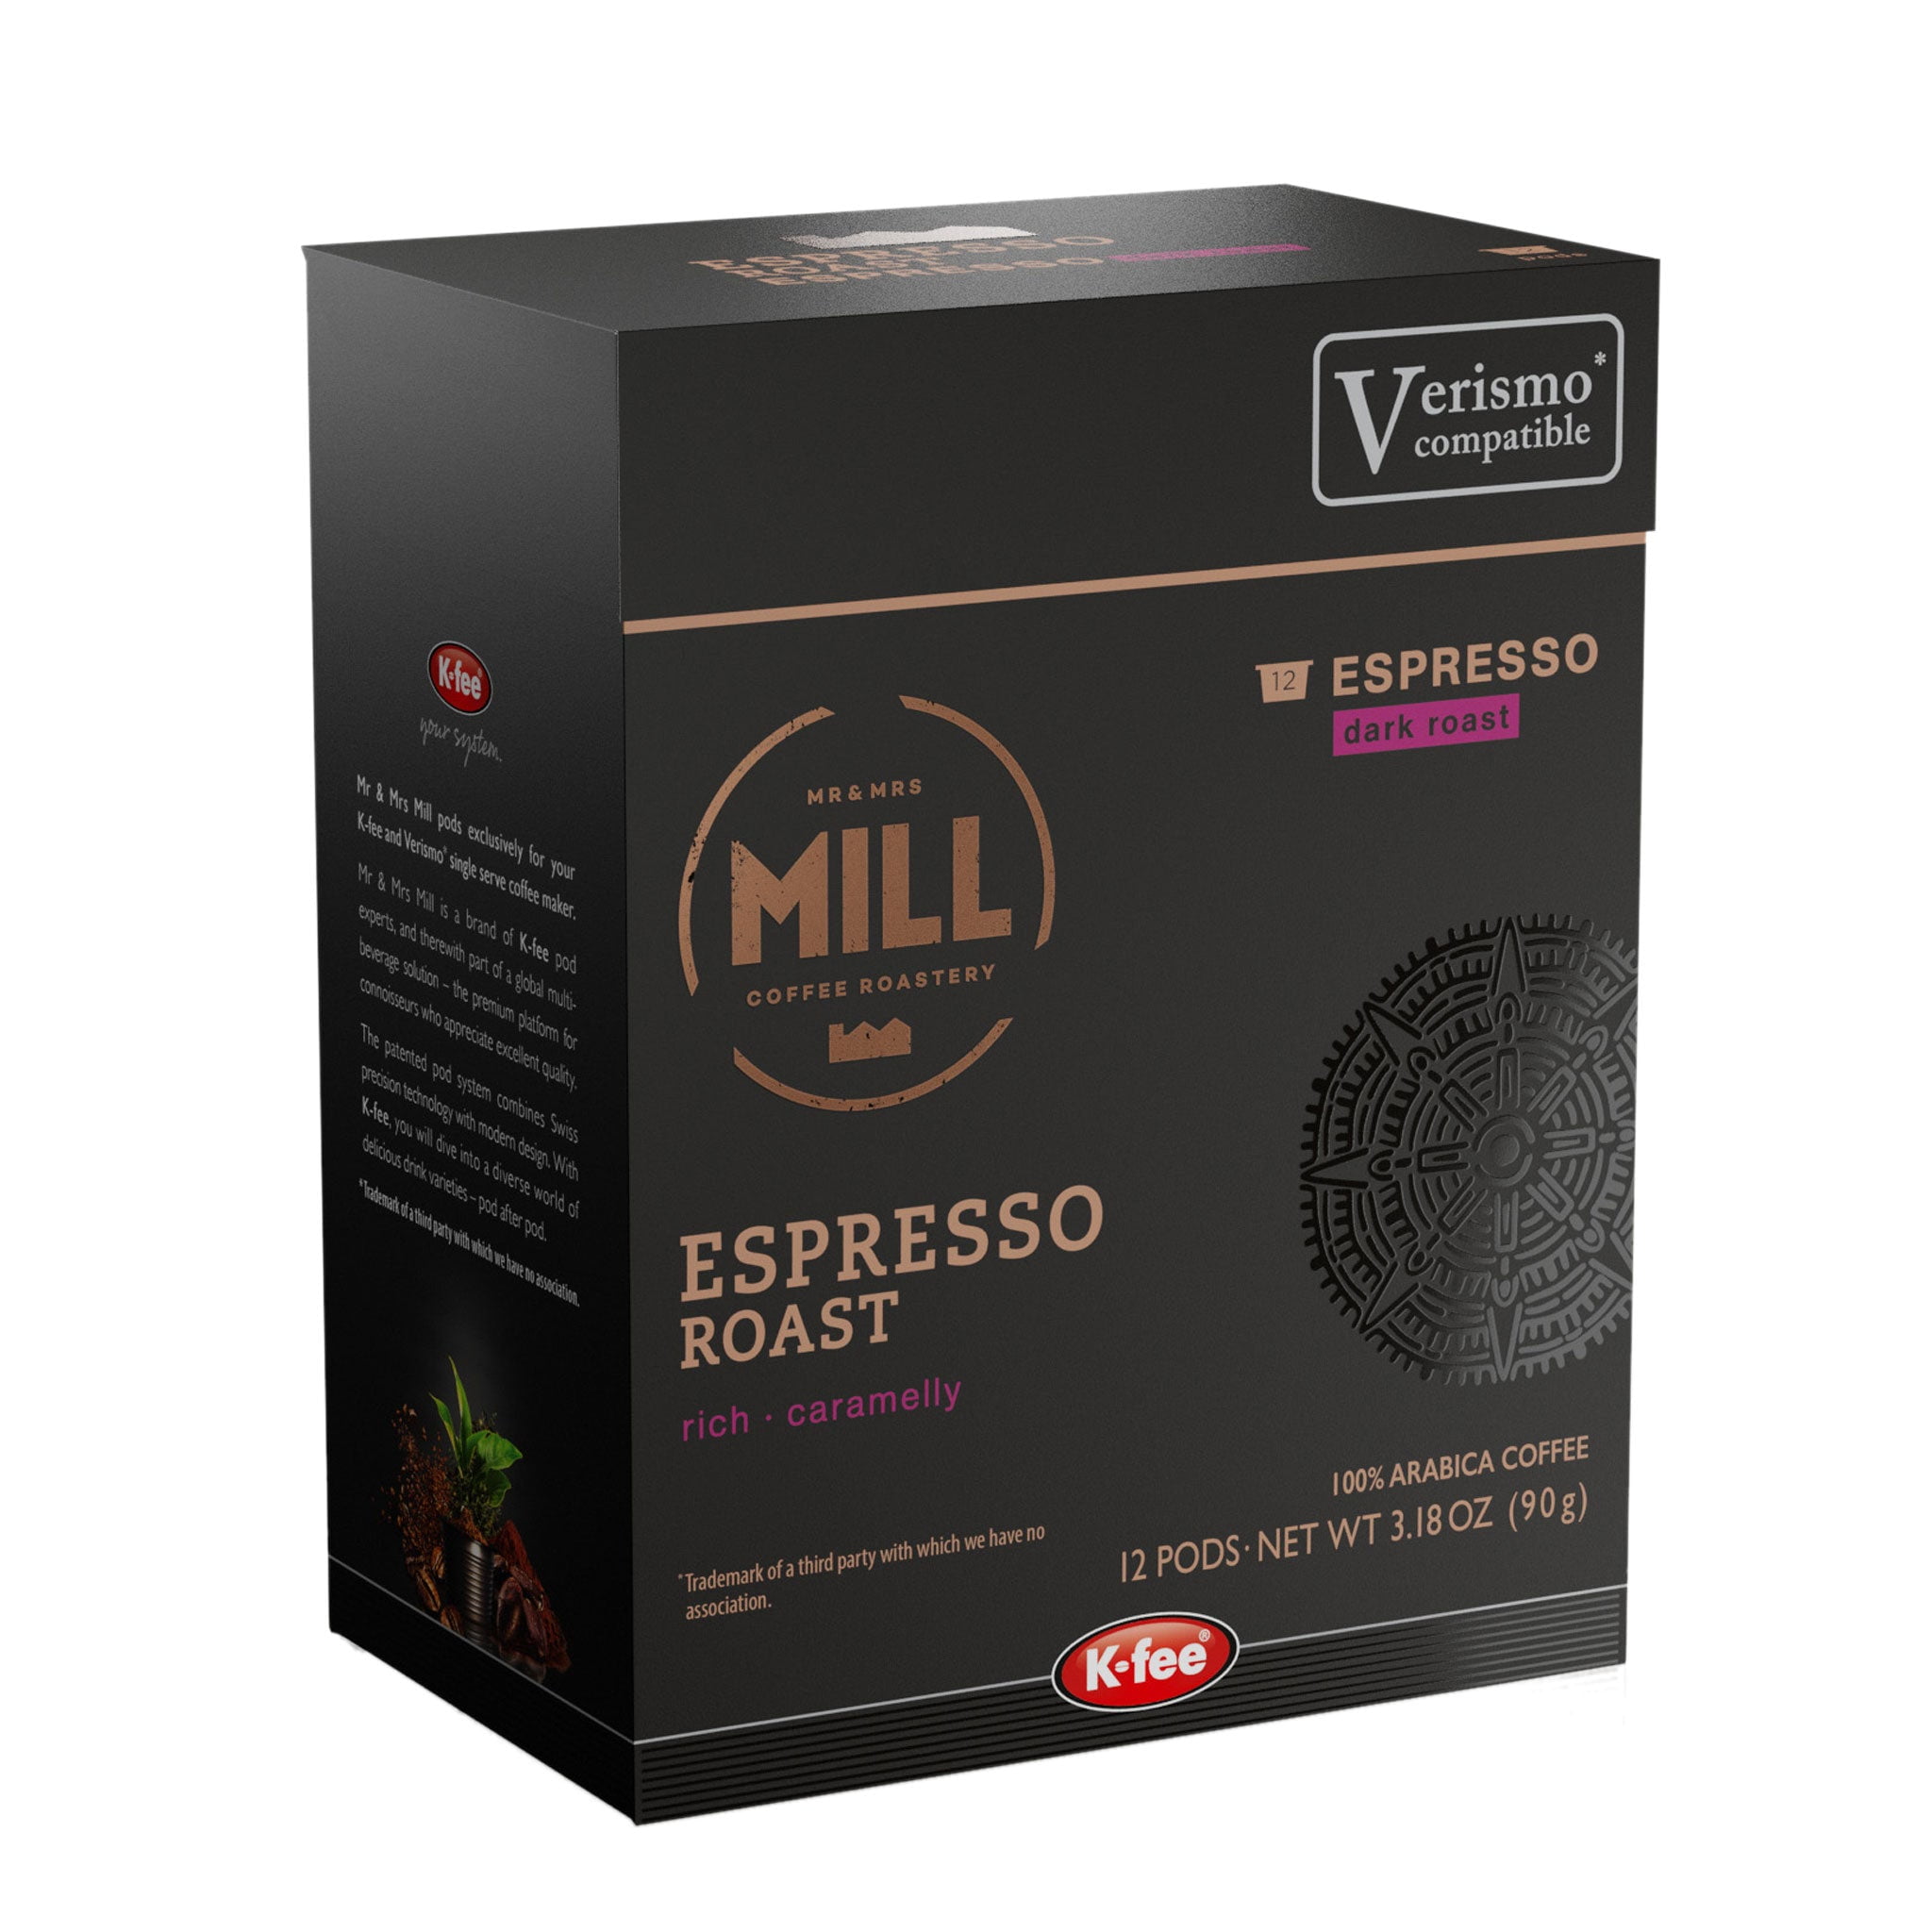 Mr and Mrs Mill Espresso Dark Roast Verismo/K-fee Compatible Single Serve Pods 72pk